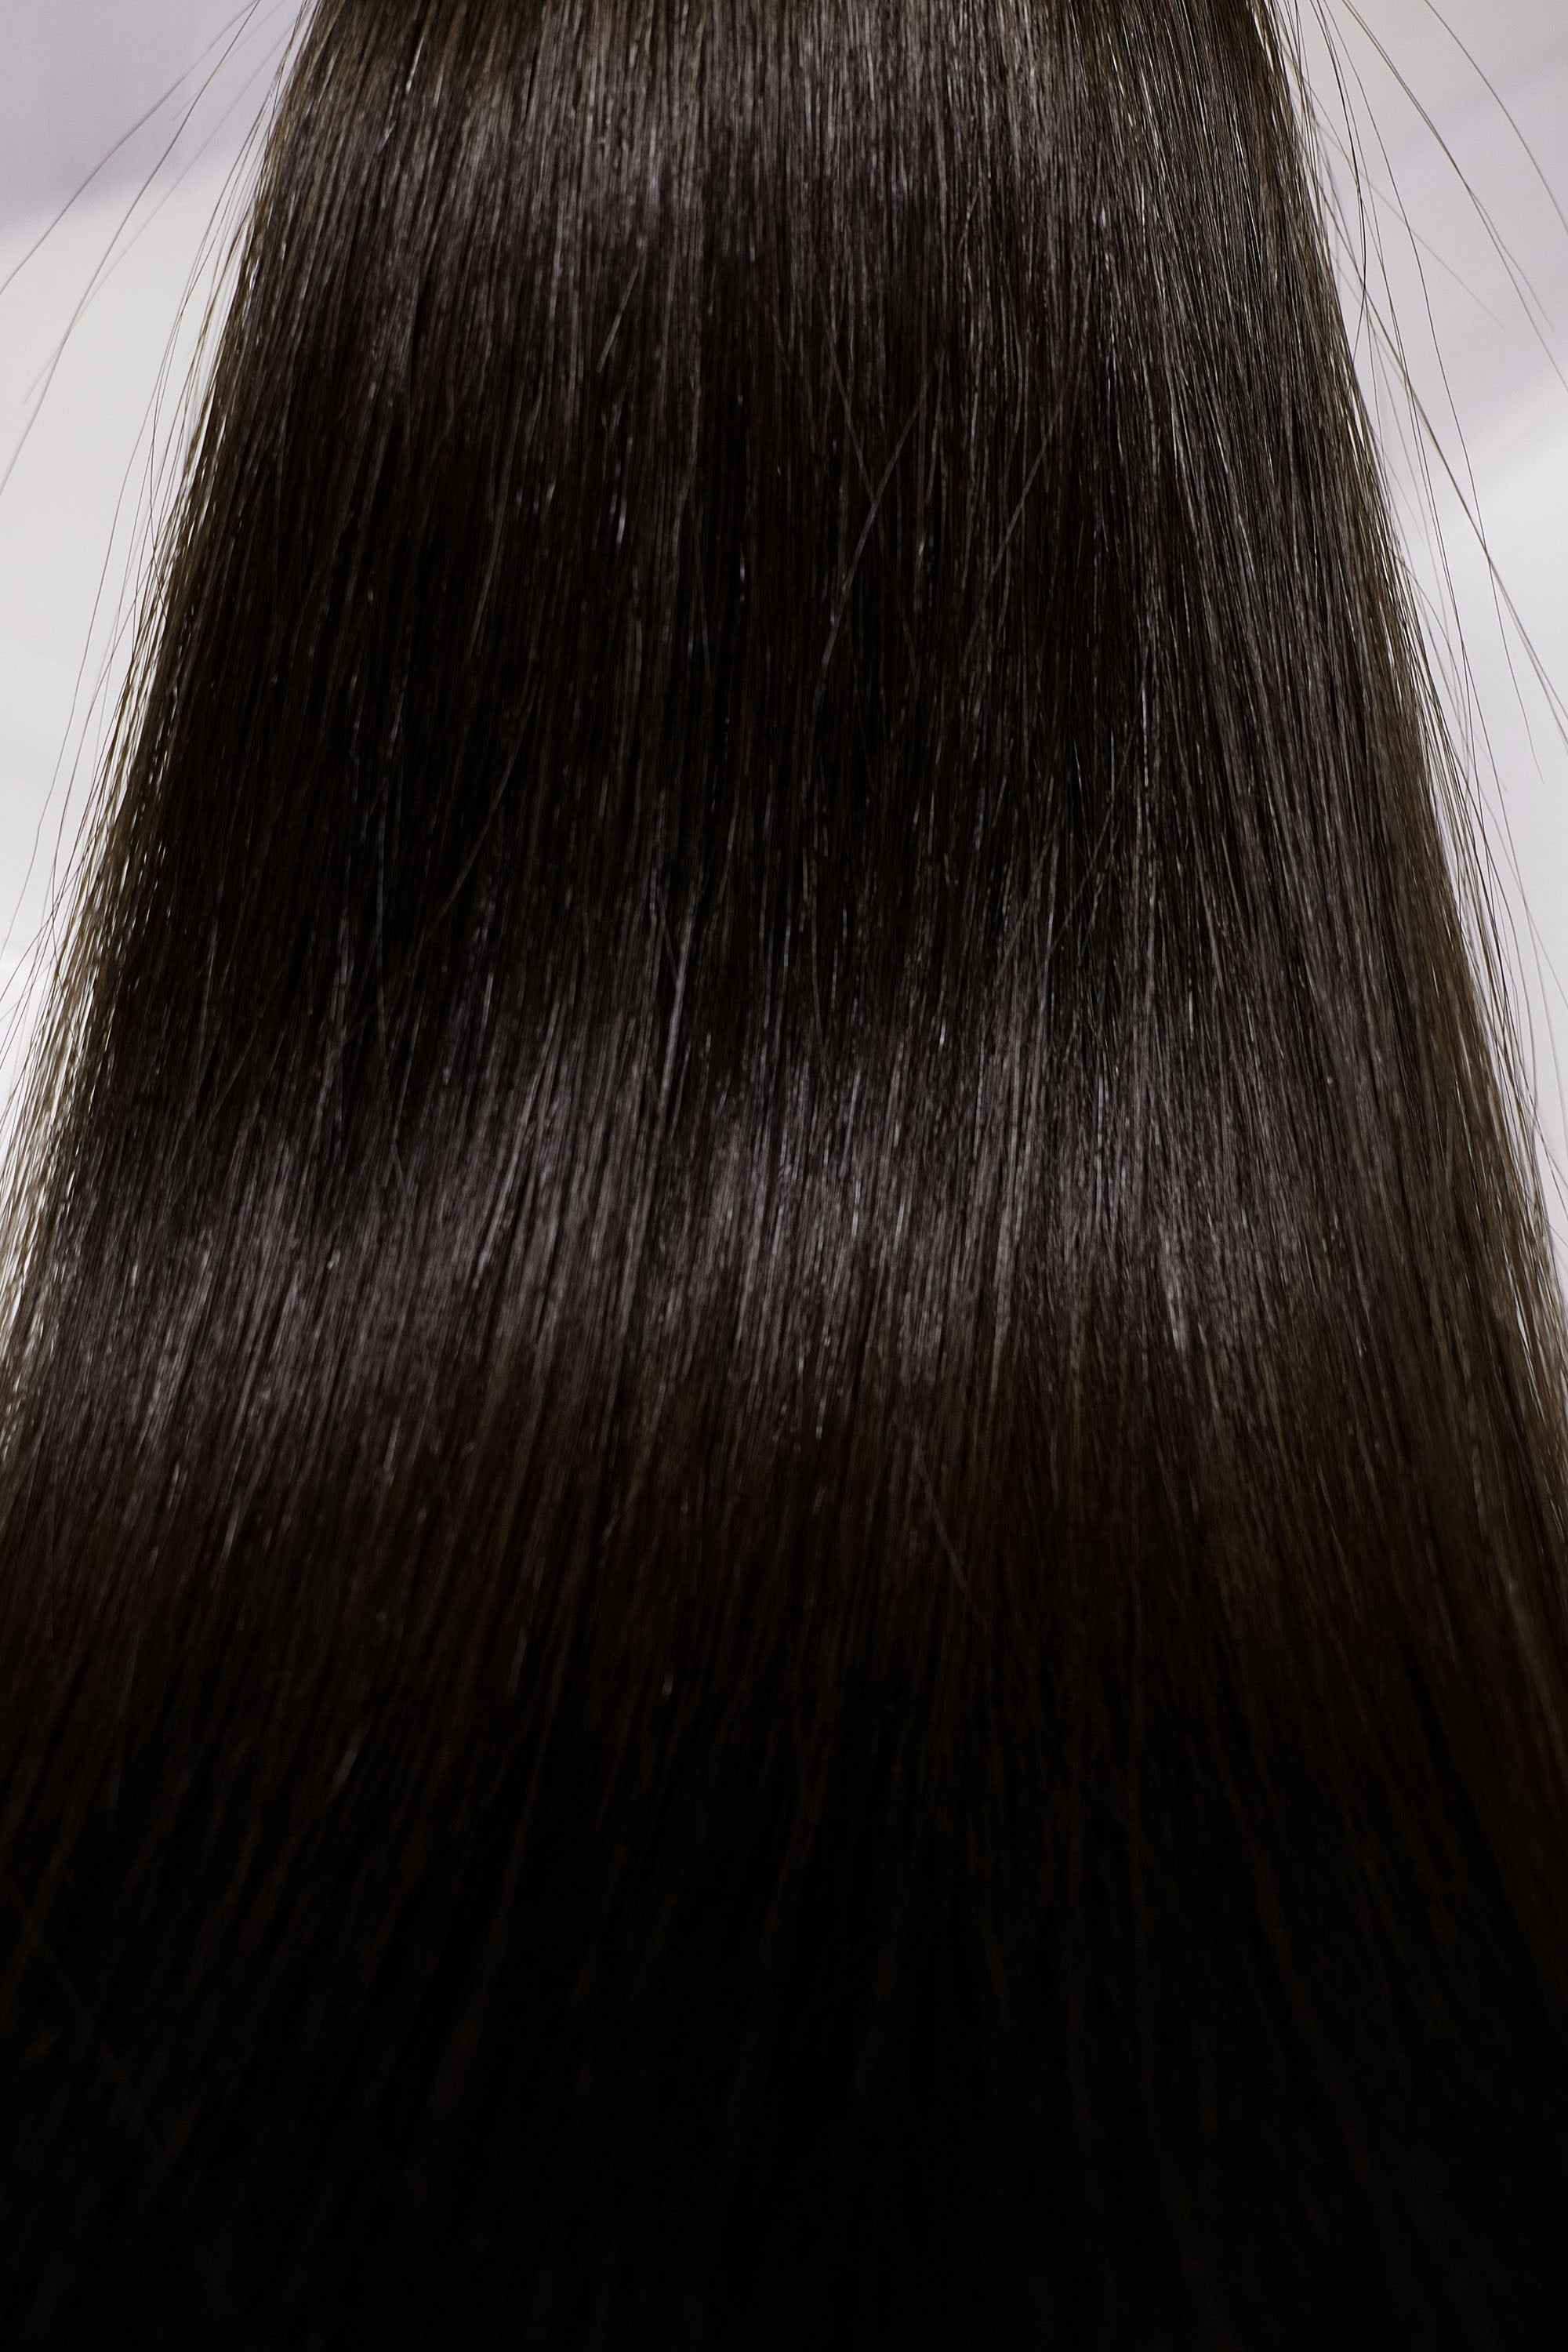 Behair professional Keratin Tip "Premium" 22" (55cm) Natural Straight Natural Black #1B - 25g (Micro - 0.5g each pcs) hair extensions